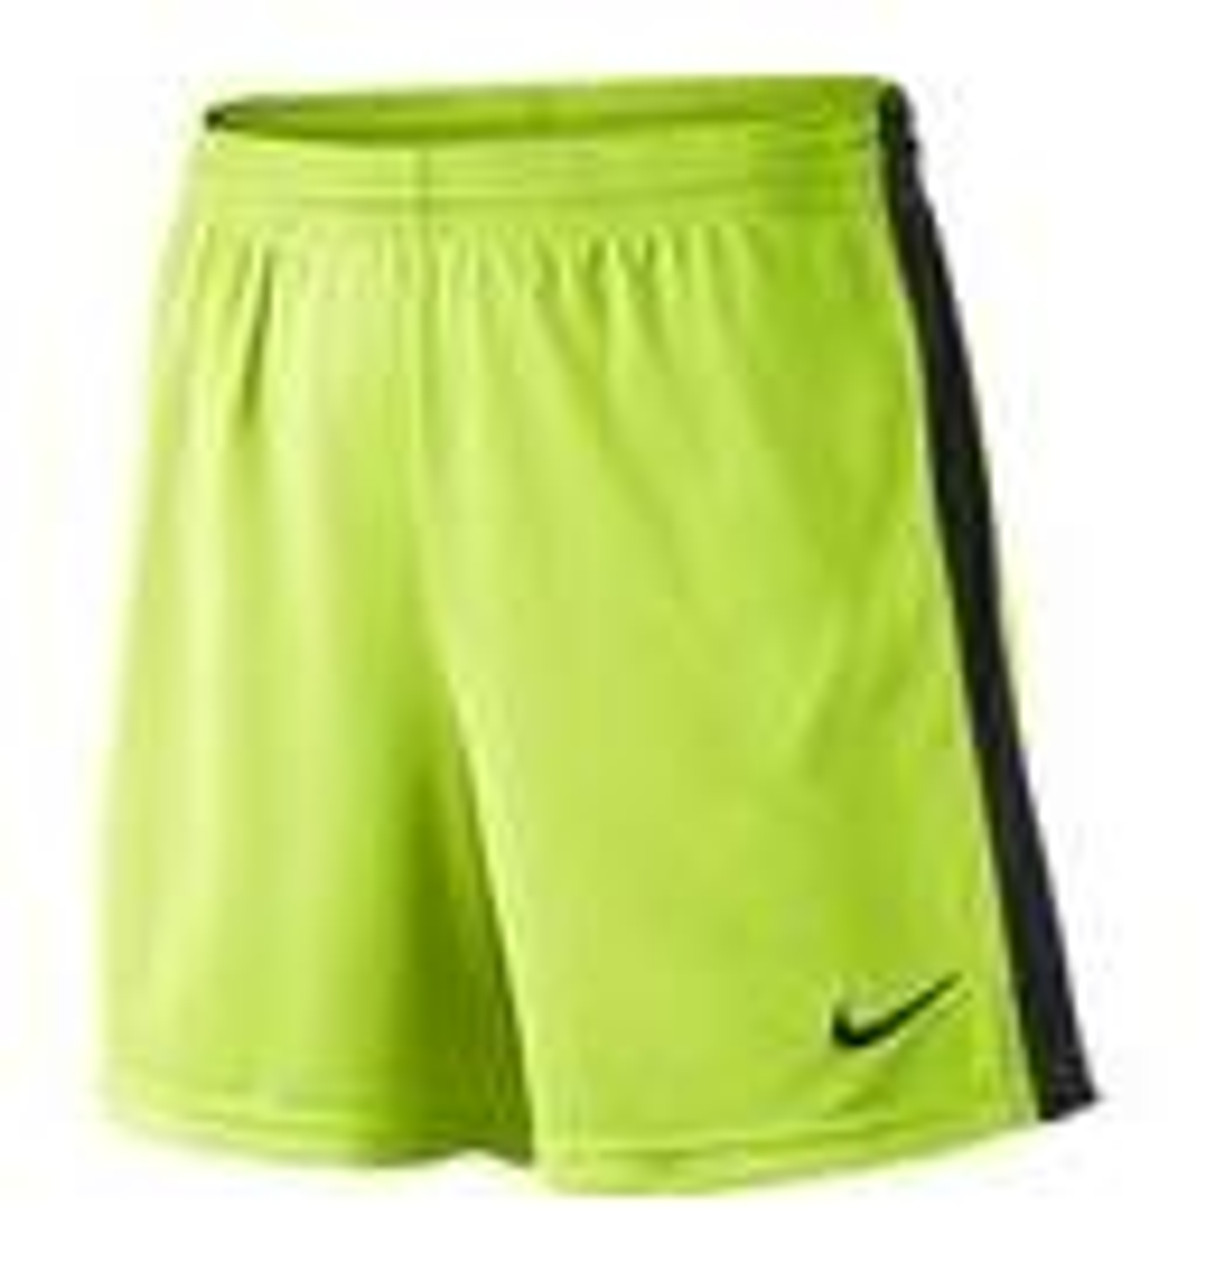 neon green nike shorts